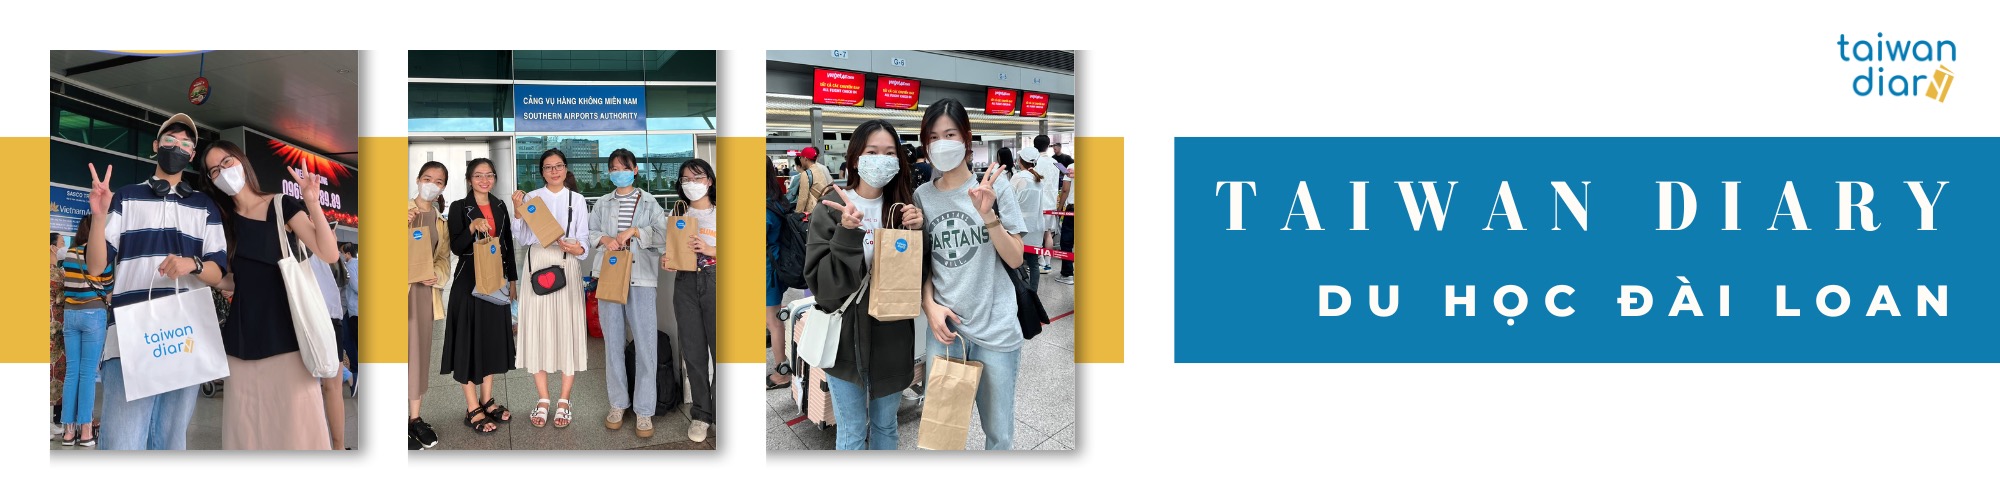 sinh-vien-taiwan-diary-airport - 1